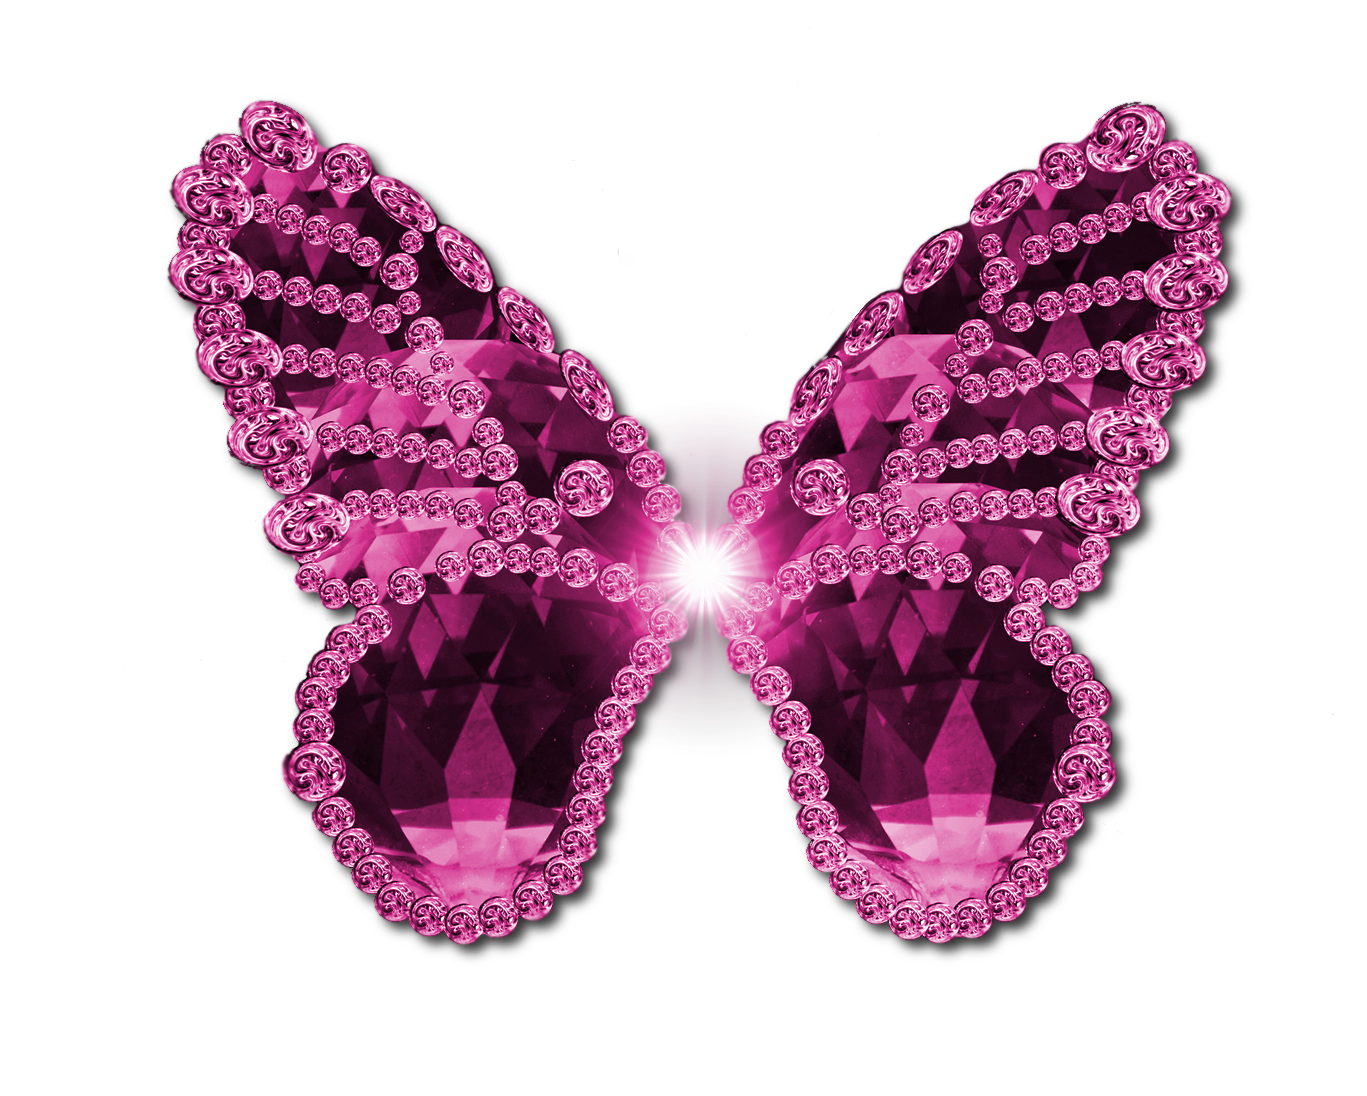 Download Pink Butterfly Transparent Image HQ PNG Image | FreePNGImg